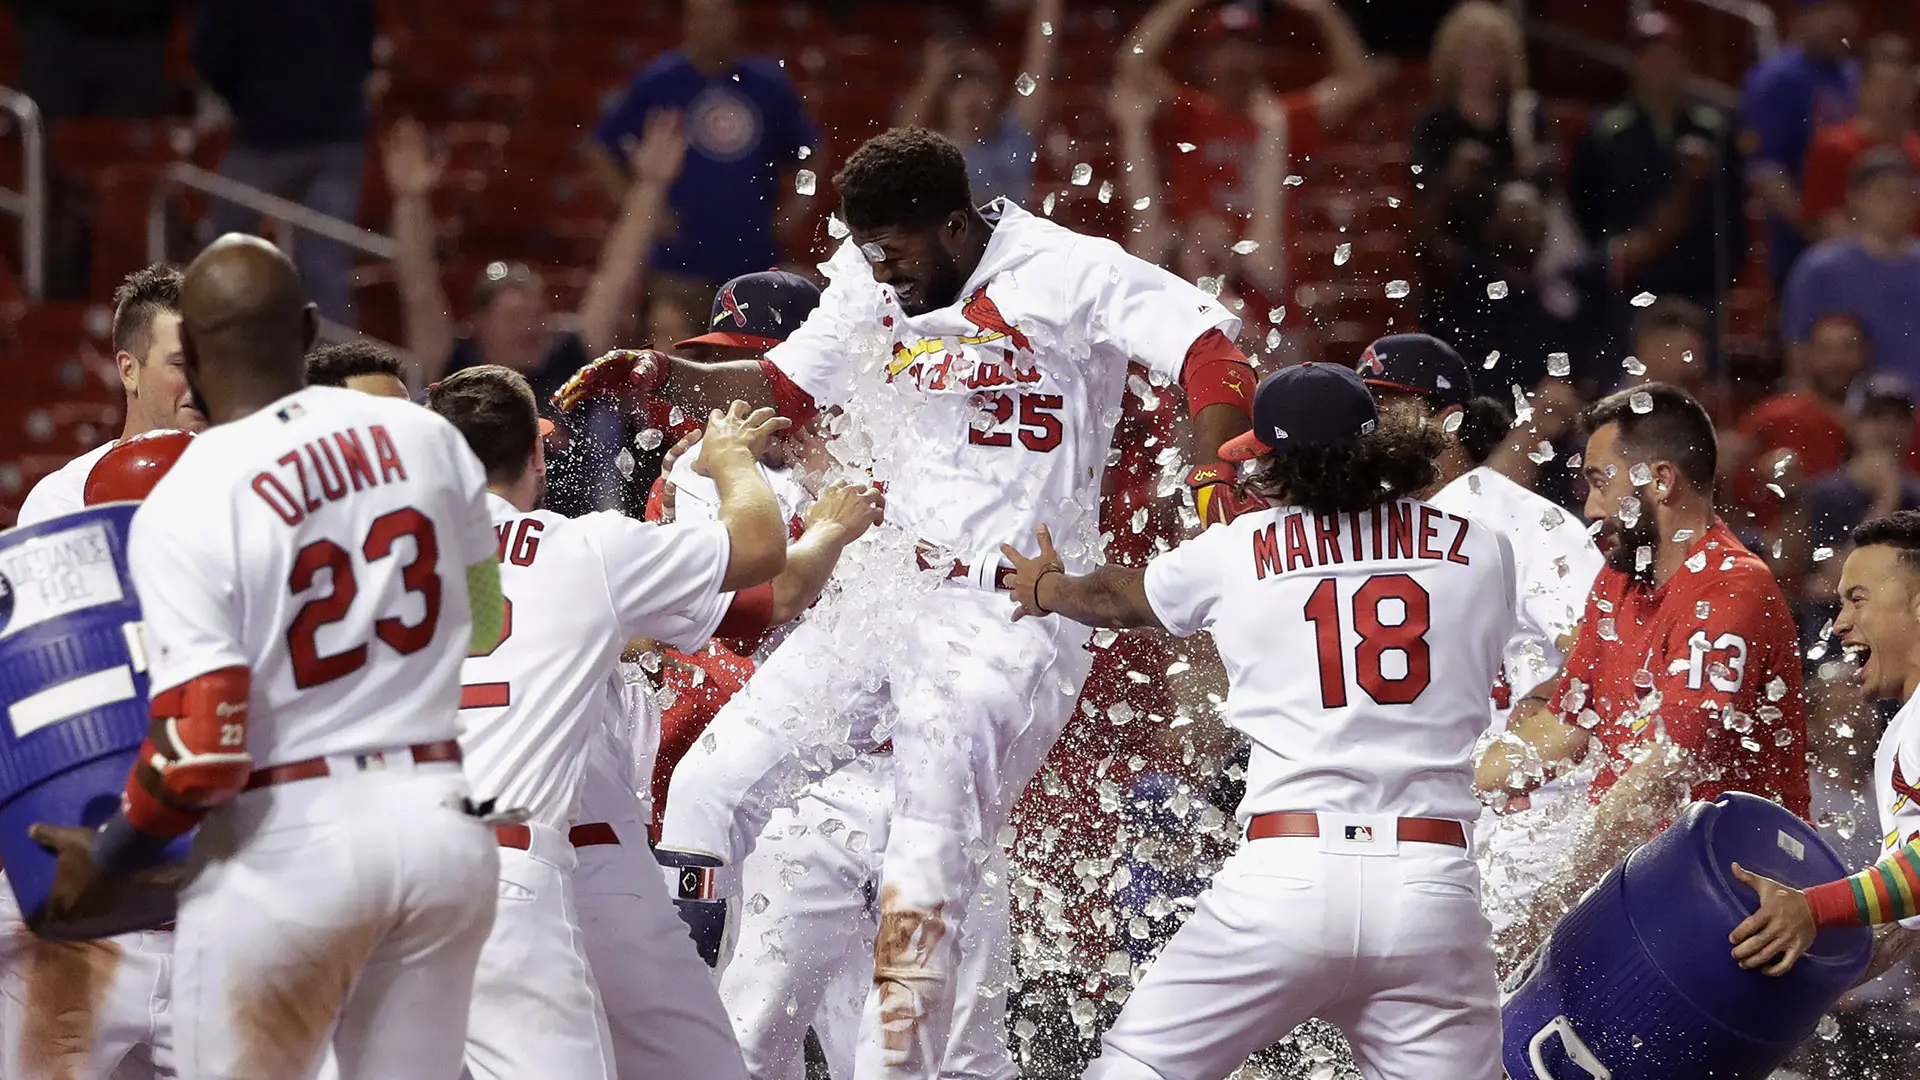 Com walk-off HR de Dexter Fowler, Cardinals derrotam Cubs